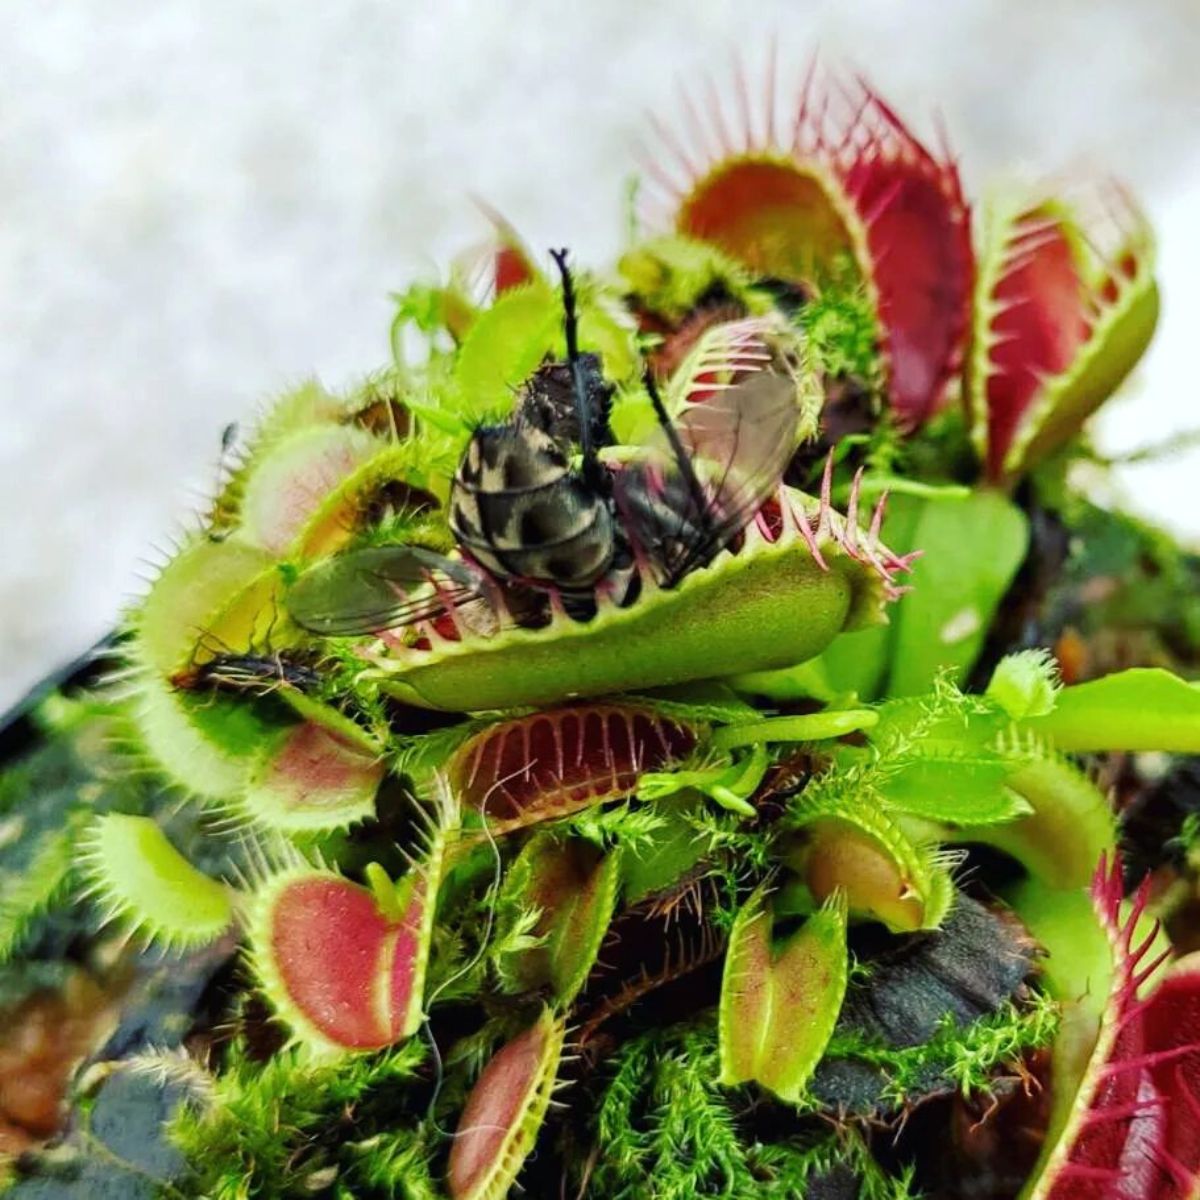 Feeding venus flytraps flies